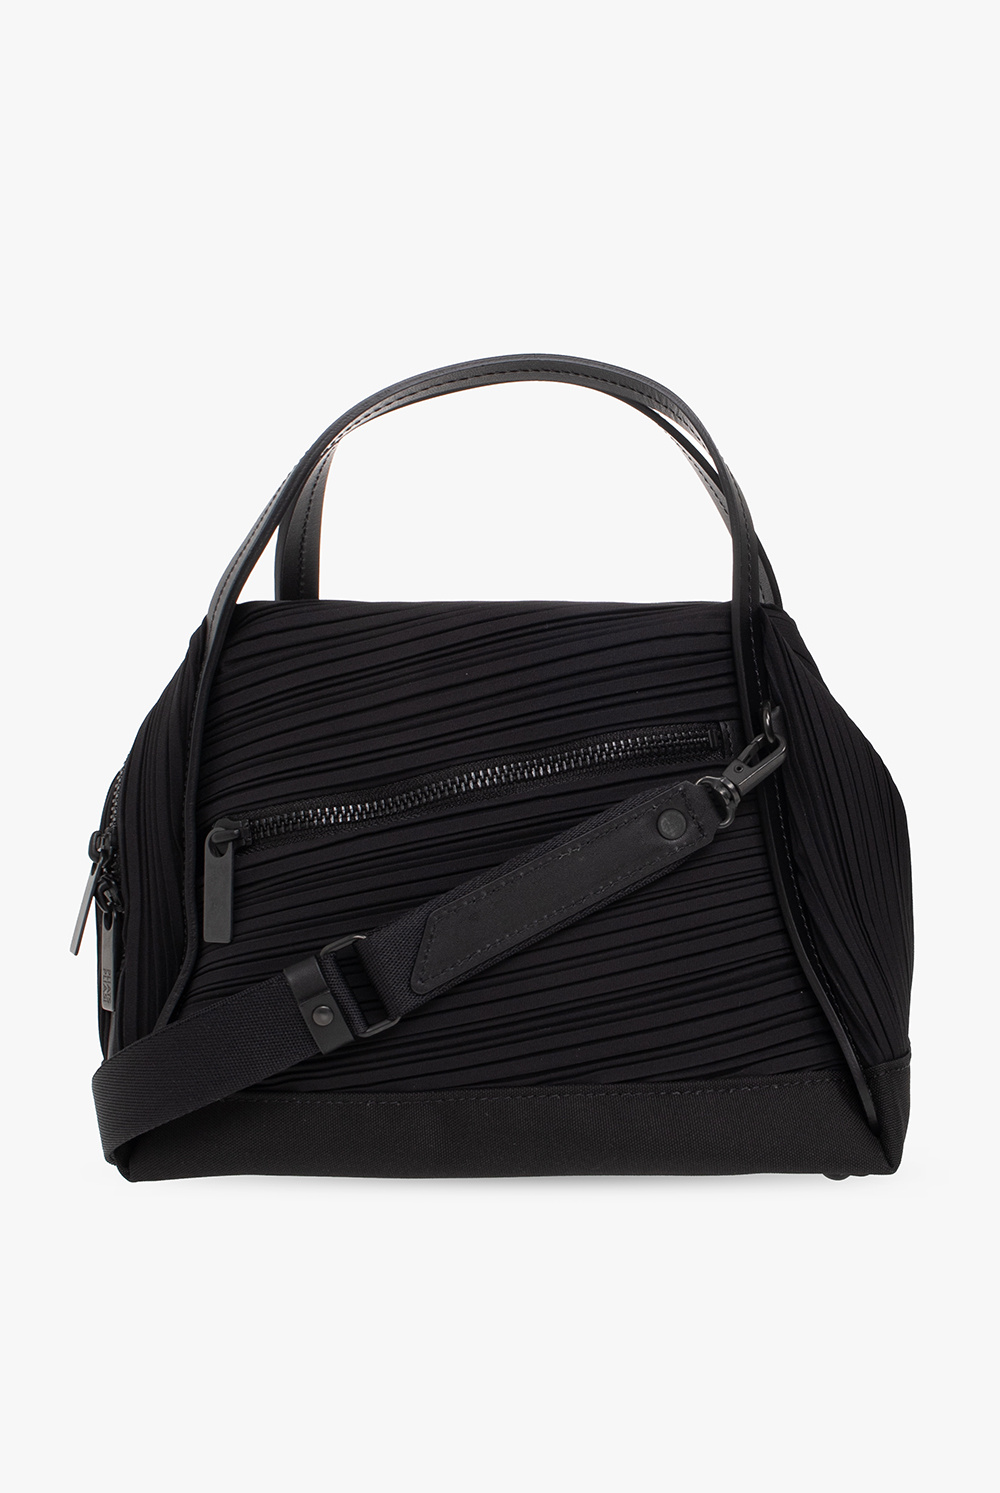 Issey Miyake Pleats Please ‘Bias Pleats’ shoulder bag | Women's Bags ...